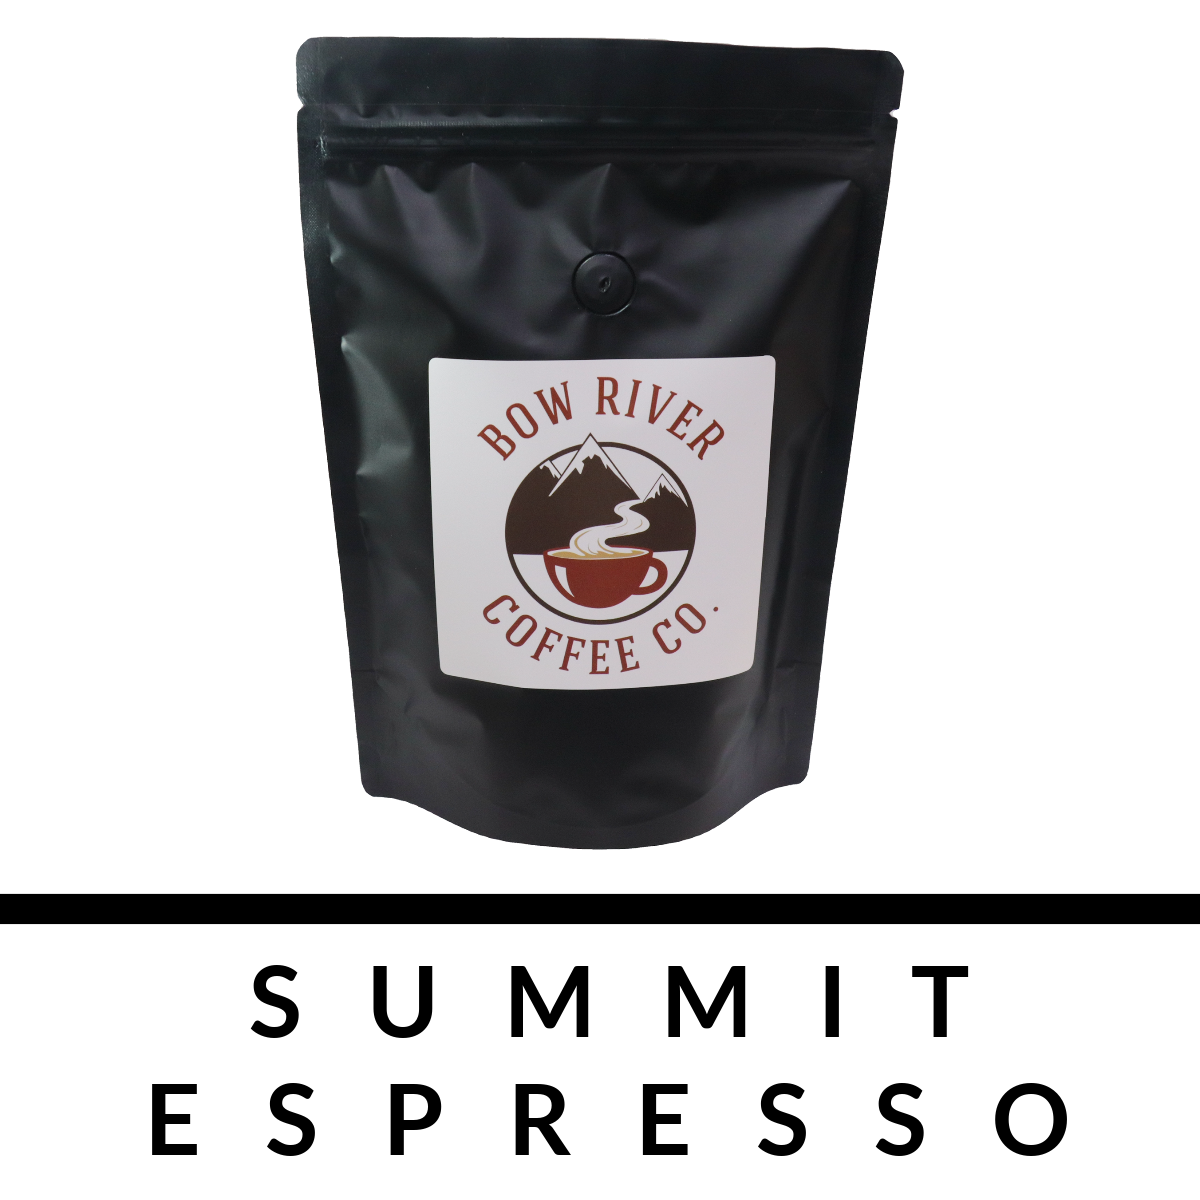 Summit Espresso